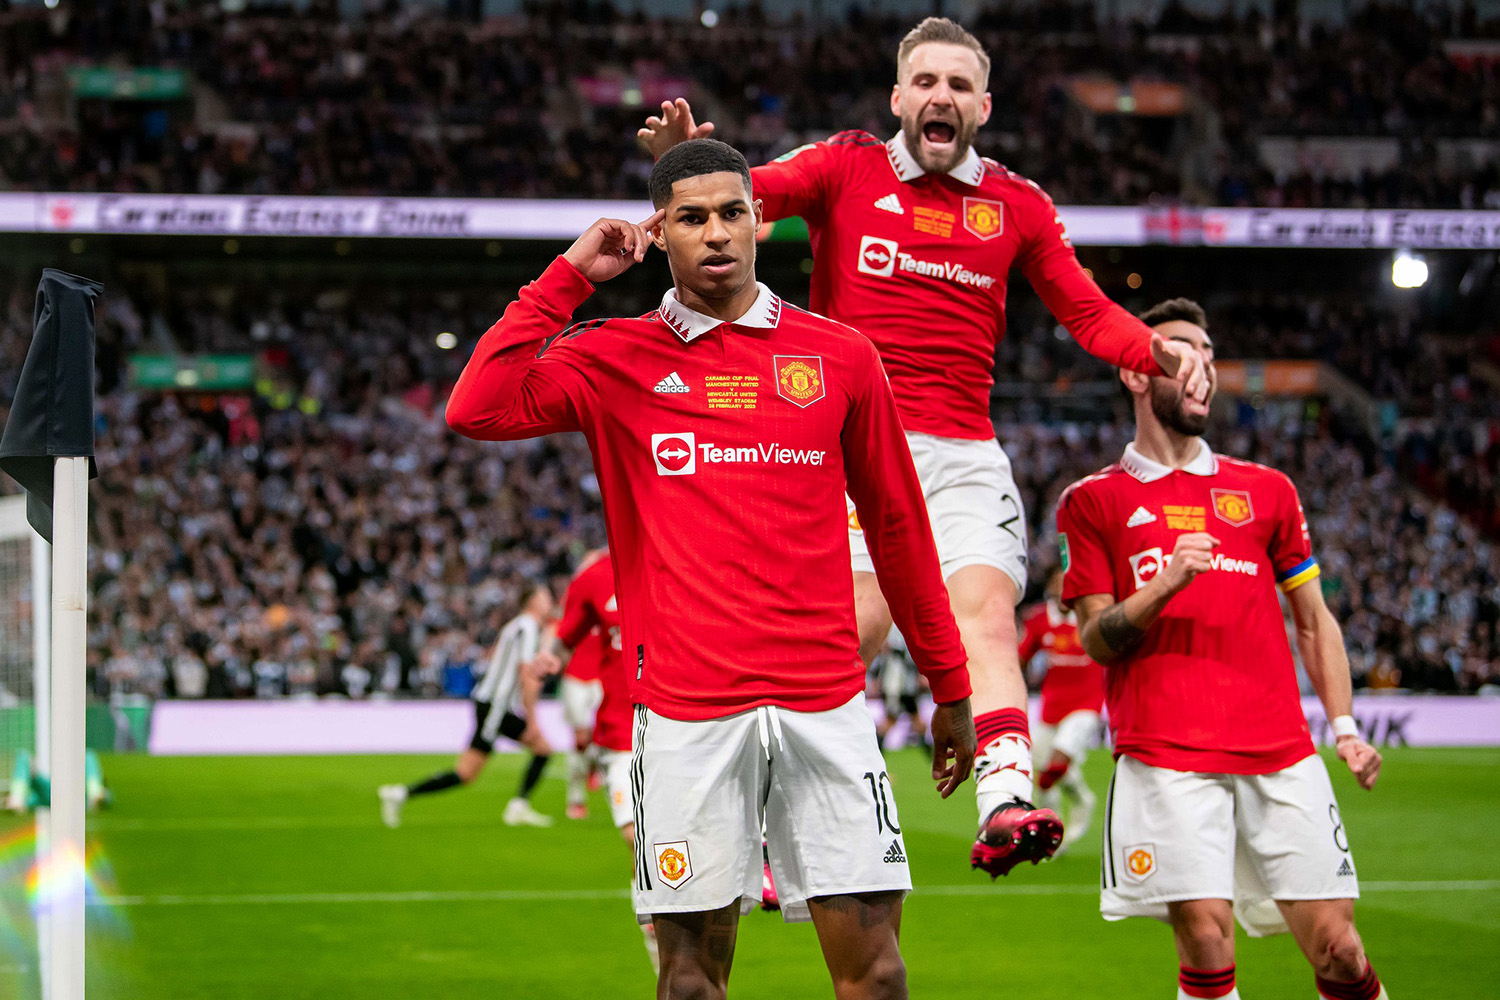 Manchester United forward Marcus Rashford celebrates with teammates after scoring.